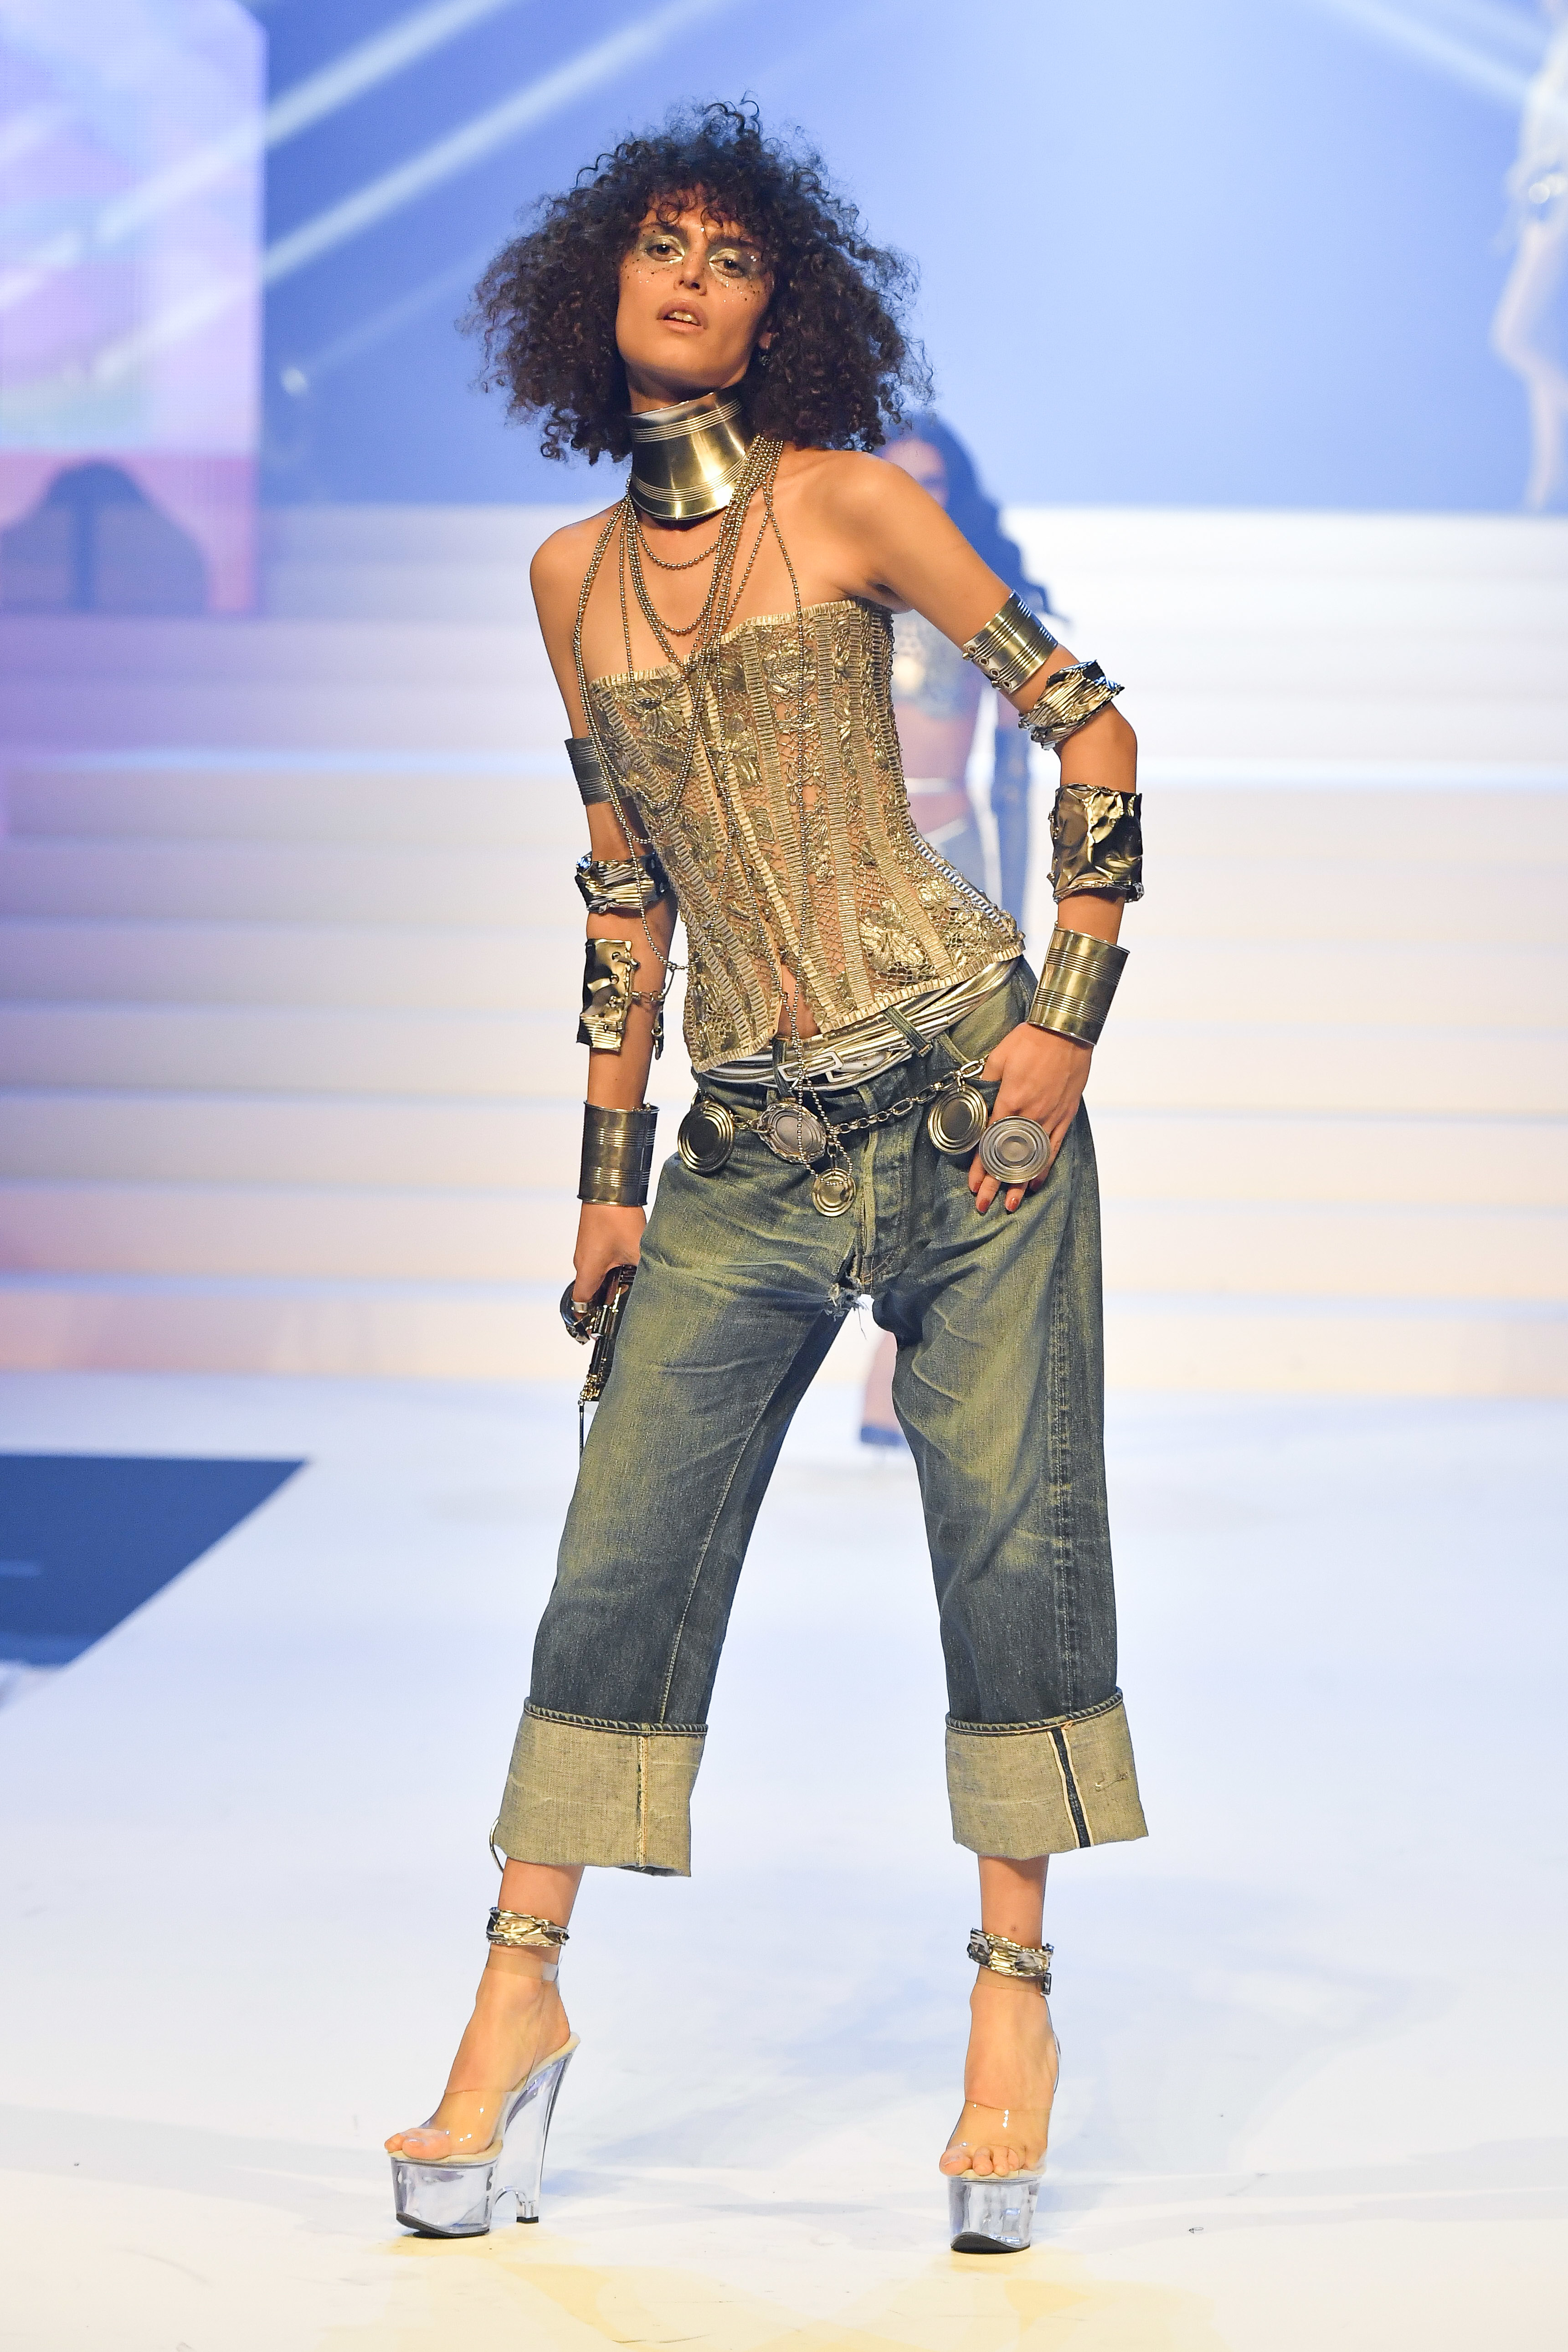 Model on runway in metallic corset top, cropped jeans, platform heels, and lots of bangles